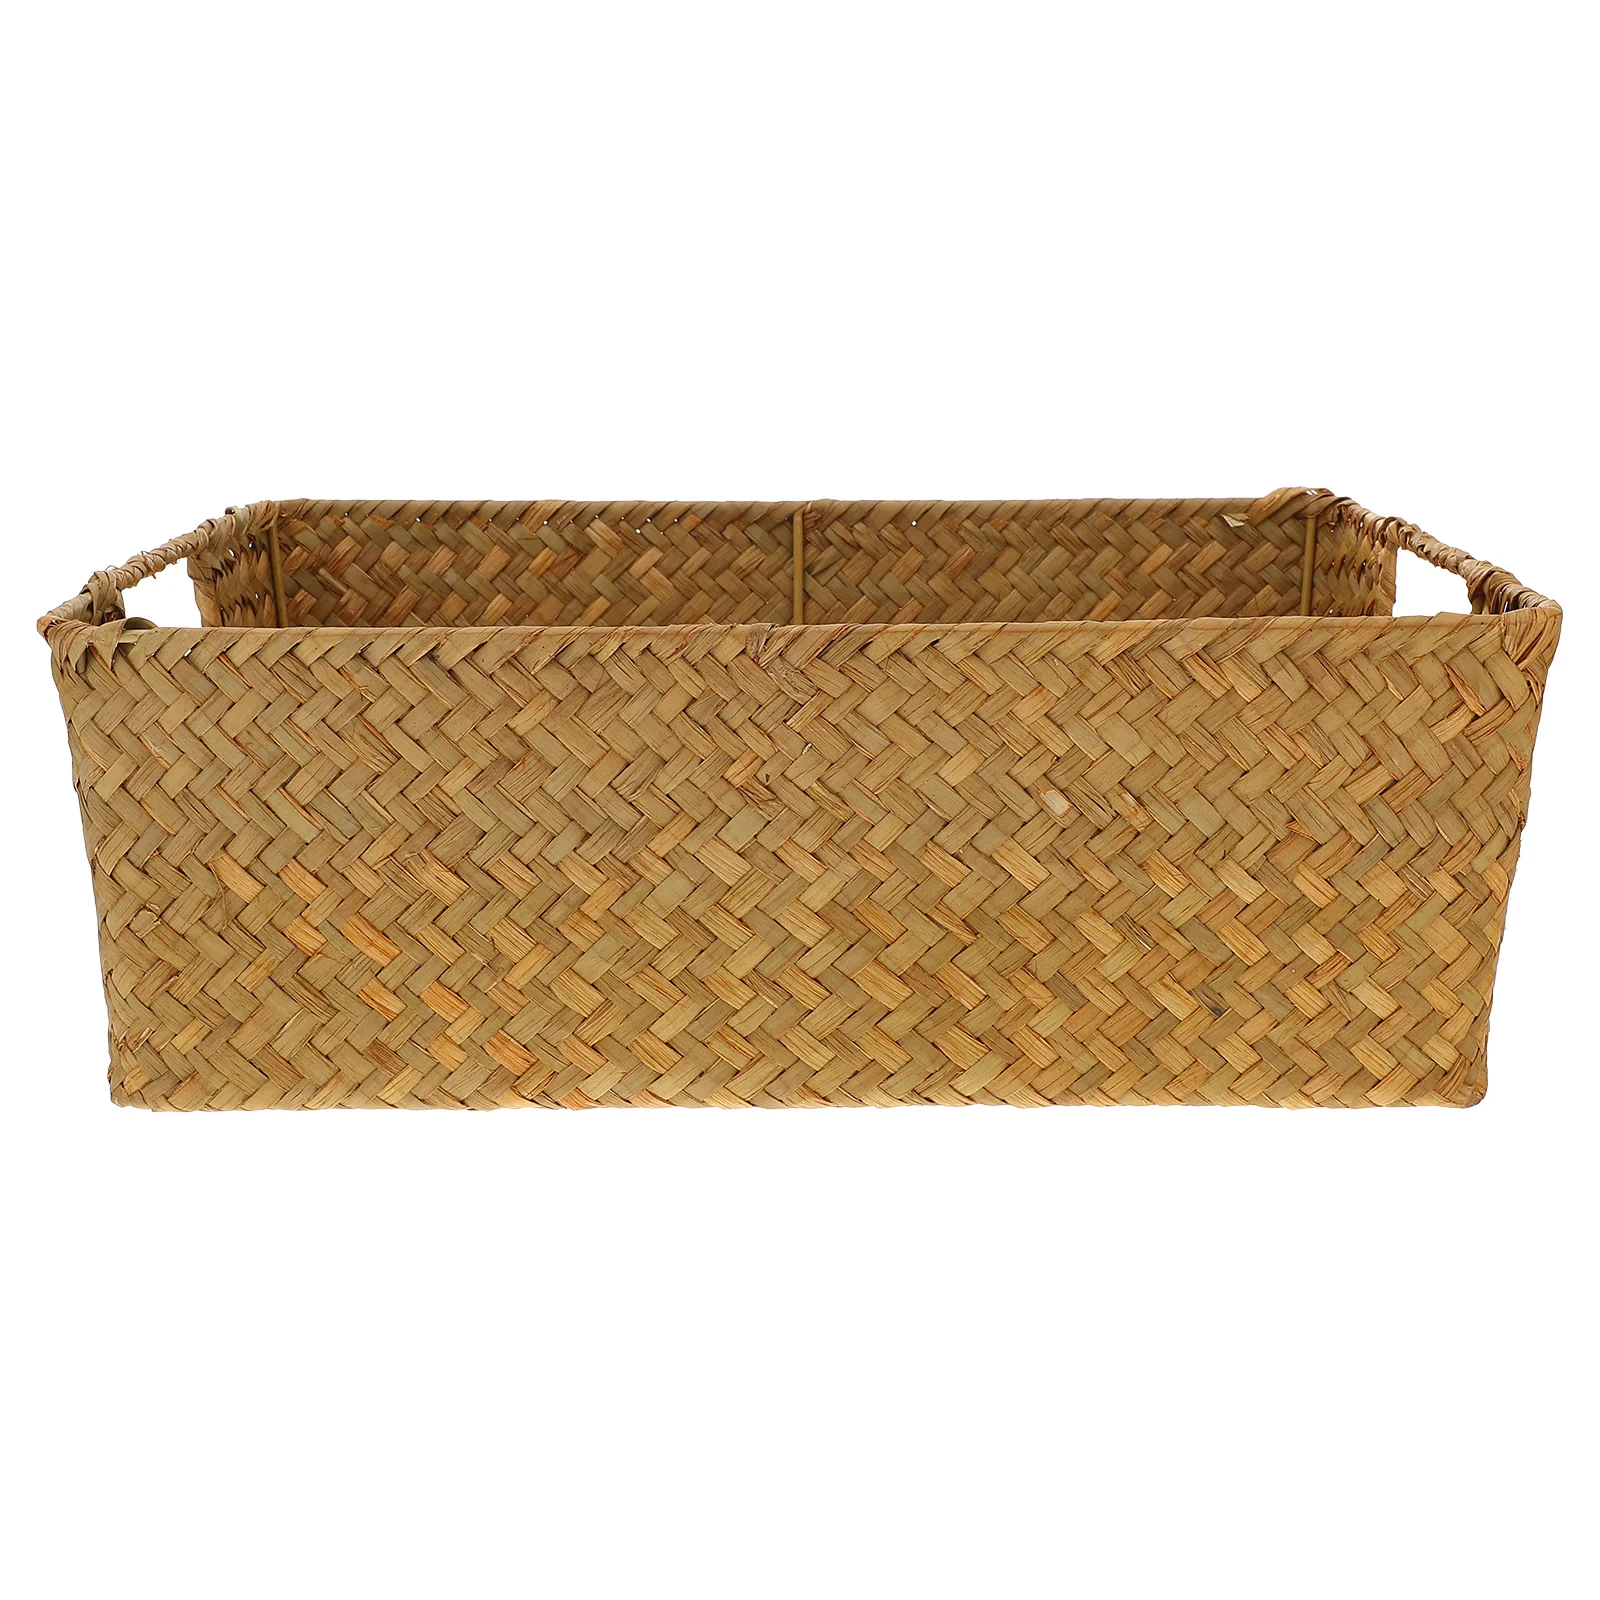 

Basket Storage Baskets Wicker Woven Seagrass Rattan Organizer Fruit Bins Bin Hamper Seaweed Large Rectangular Serving Box